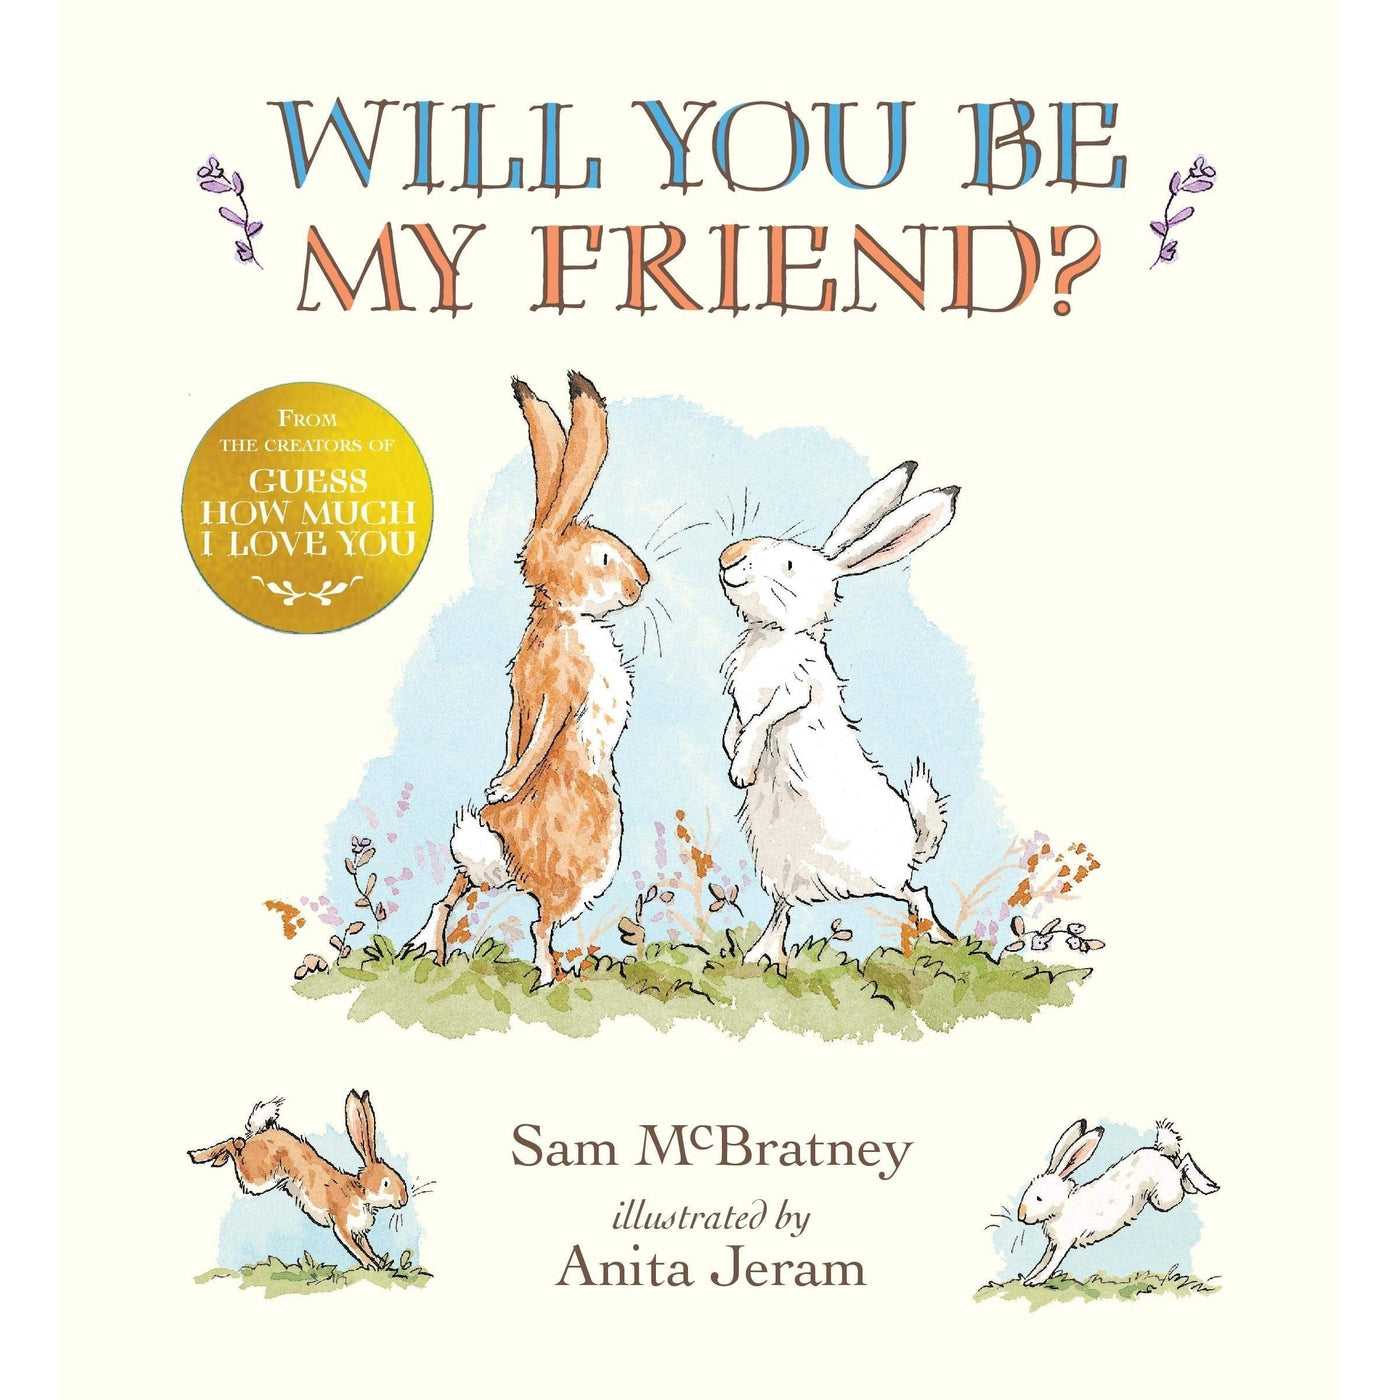 Will You Be My Friend? - Sam Mcbratney & Anita Jeram